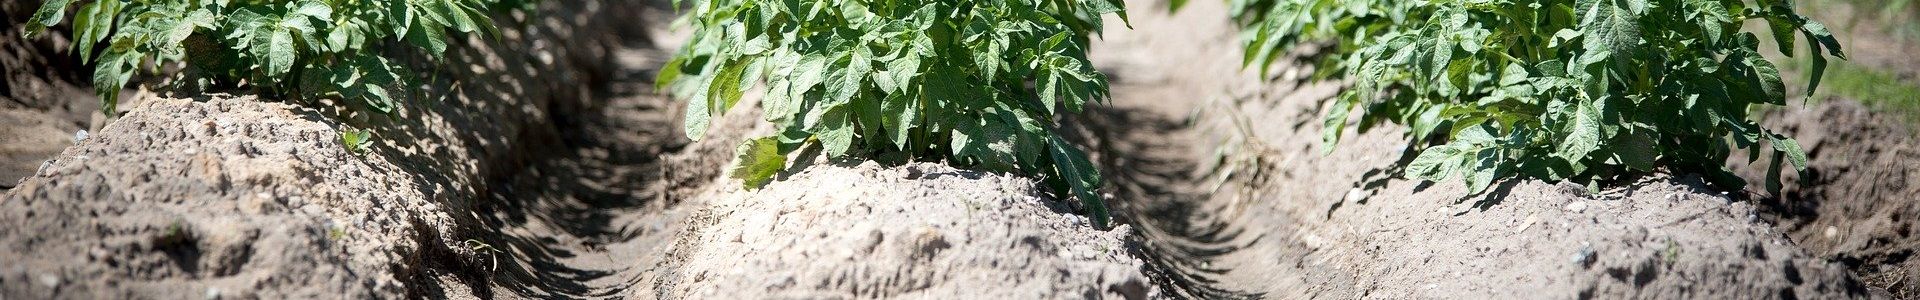 crops nutrients soil